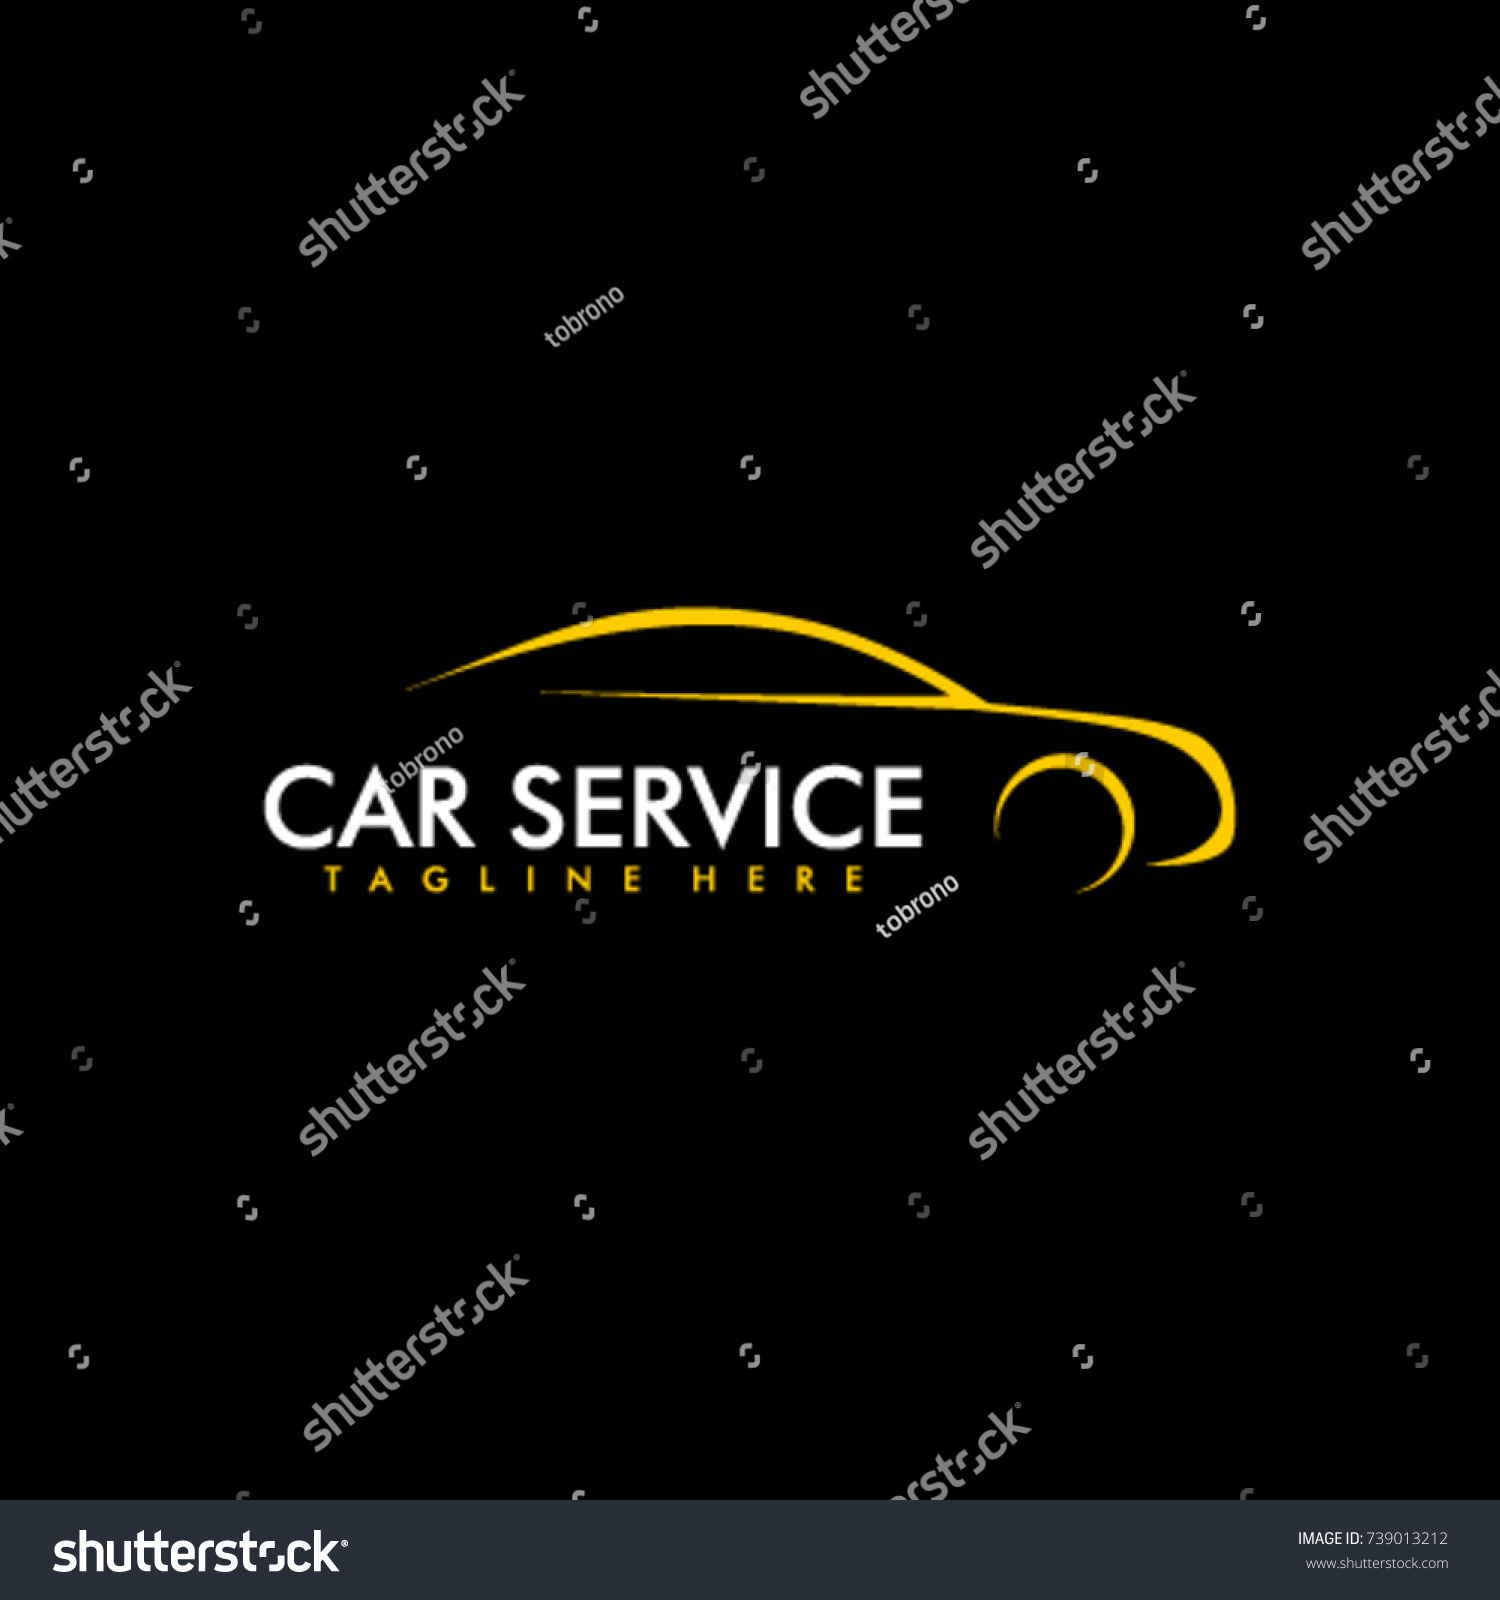 16,180 Car service business card Images, Stock Photos & Vectors ...